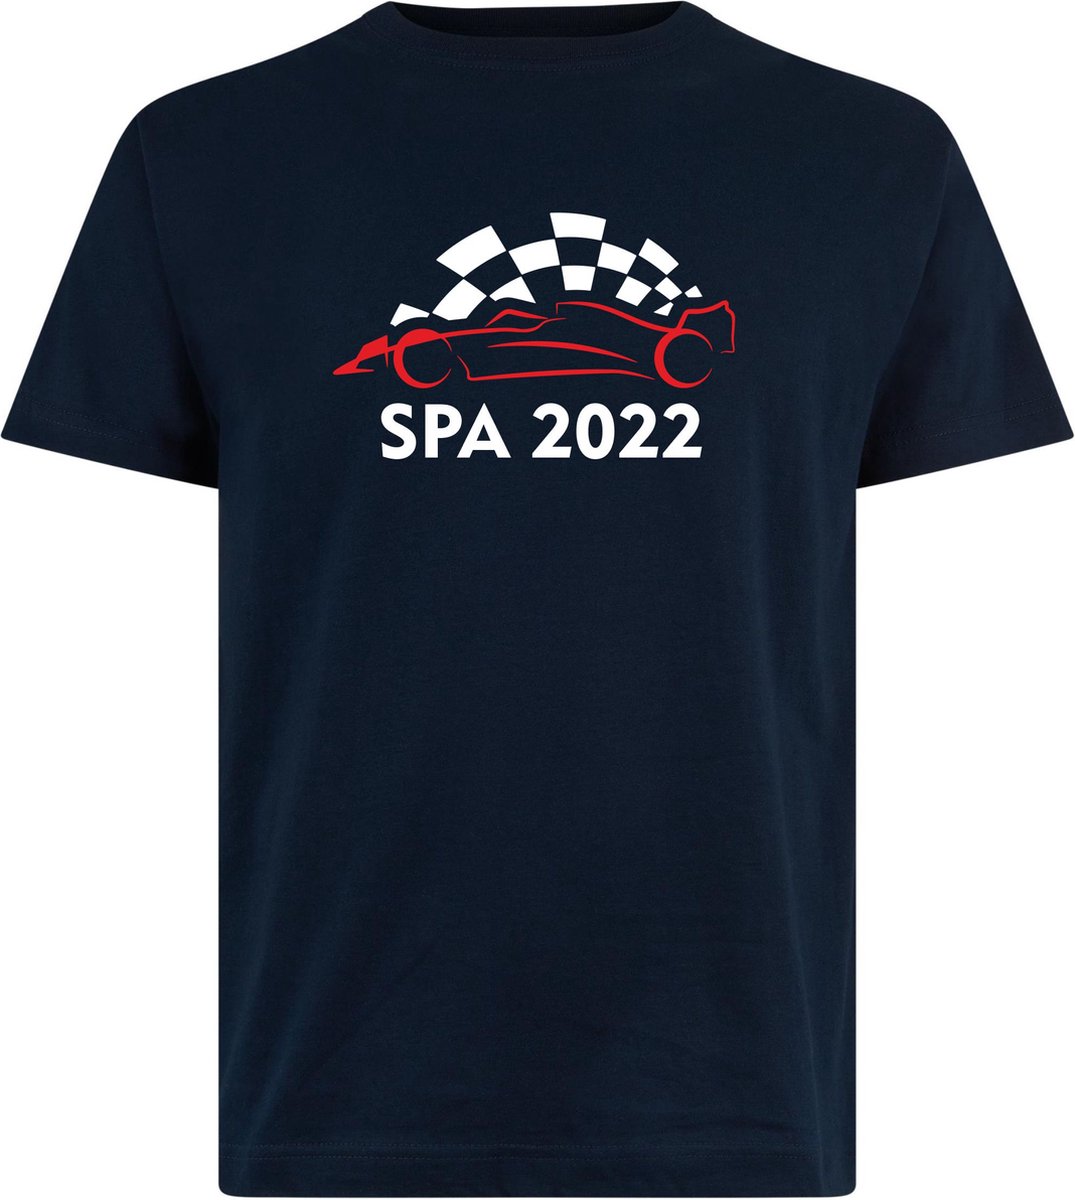 T-shirt Spa 2022 met raceauto | Max Verstappen / Red Bull Racing / Formule 1 fan | Grand Prix Circuit Spa-Francorchamps | kleding shirt | Navy | maat M